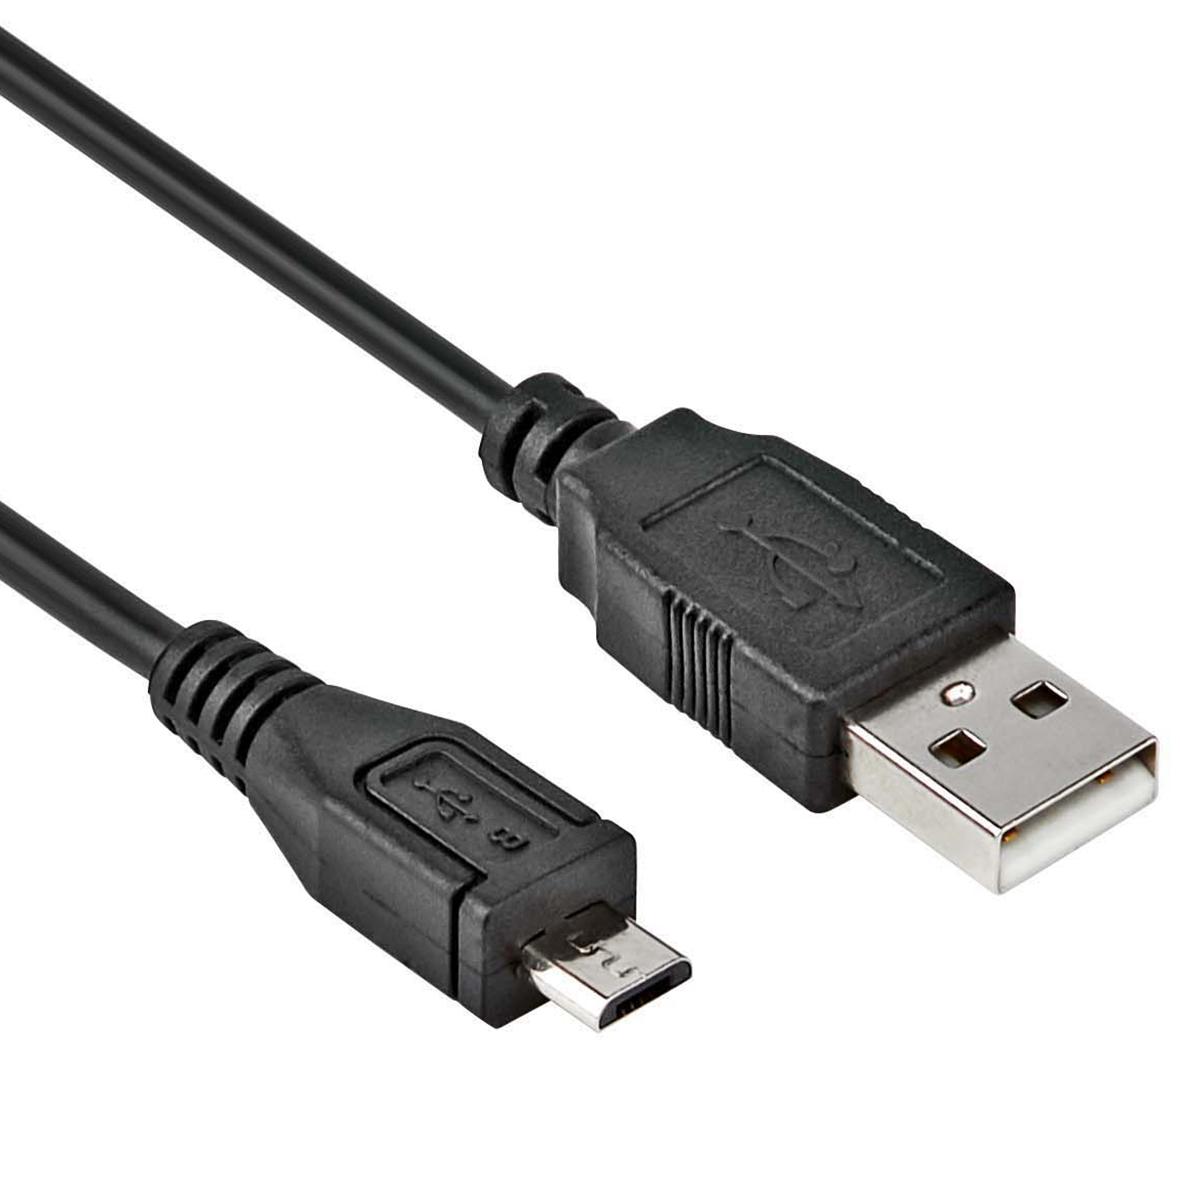 USB Micro B datakabel - 0.1 meter - Zwart - Allteq